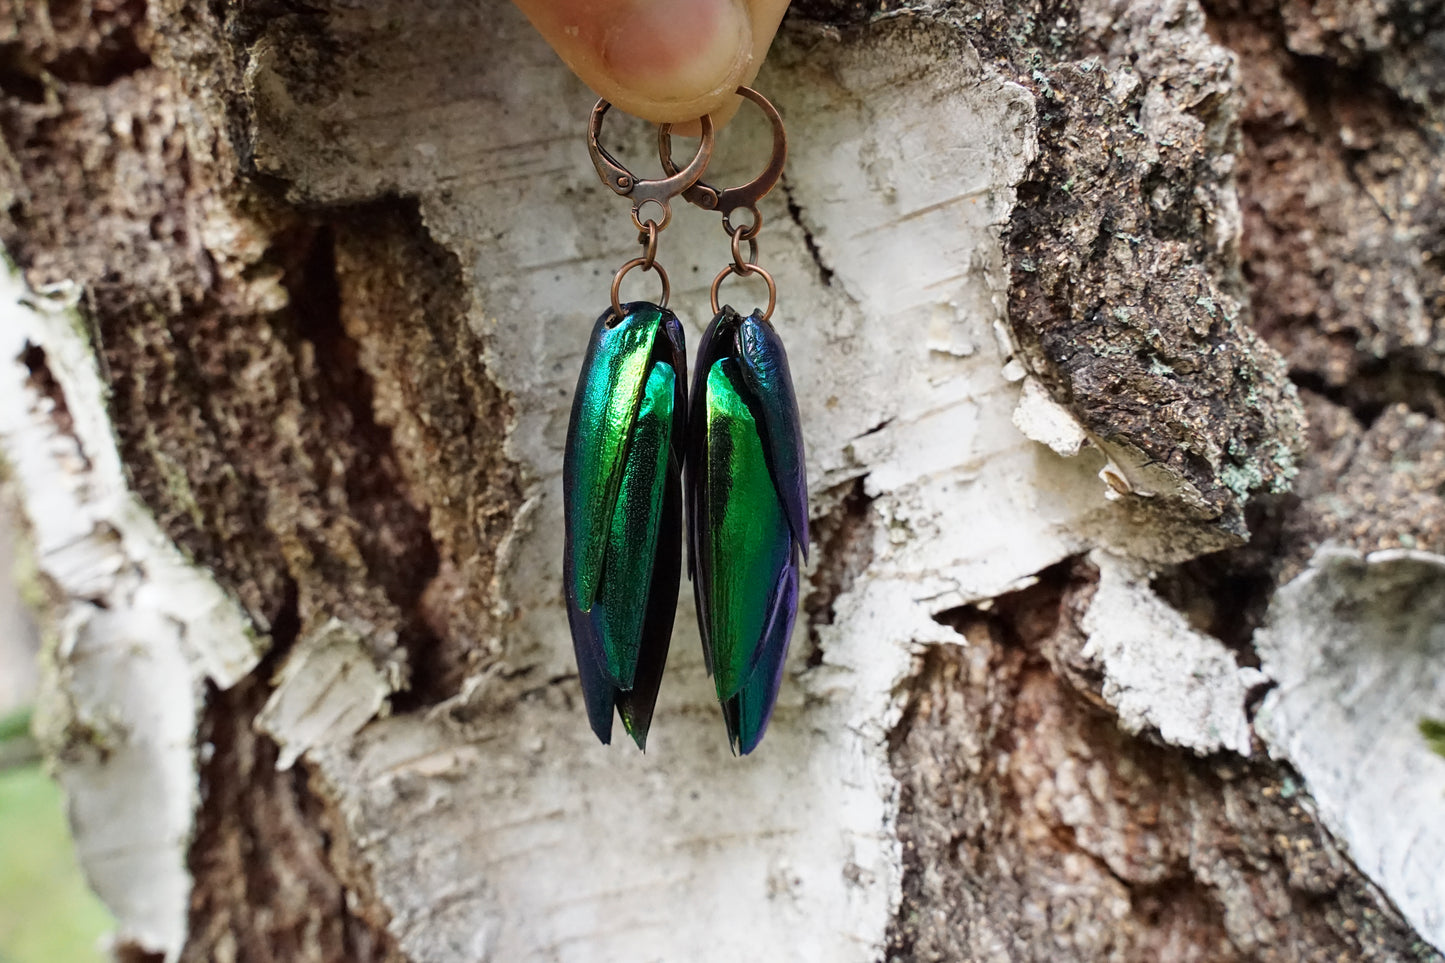 Beetle wing earrings